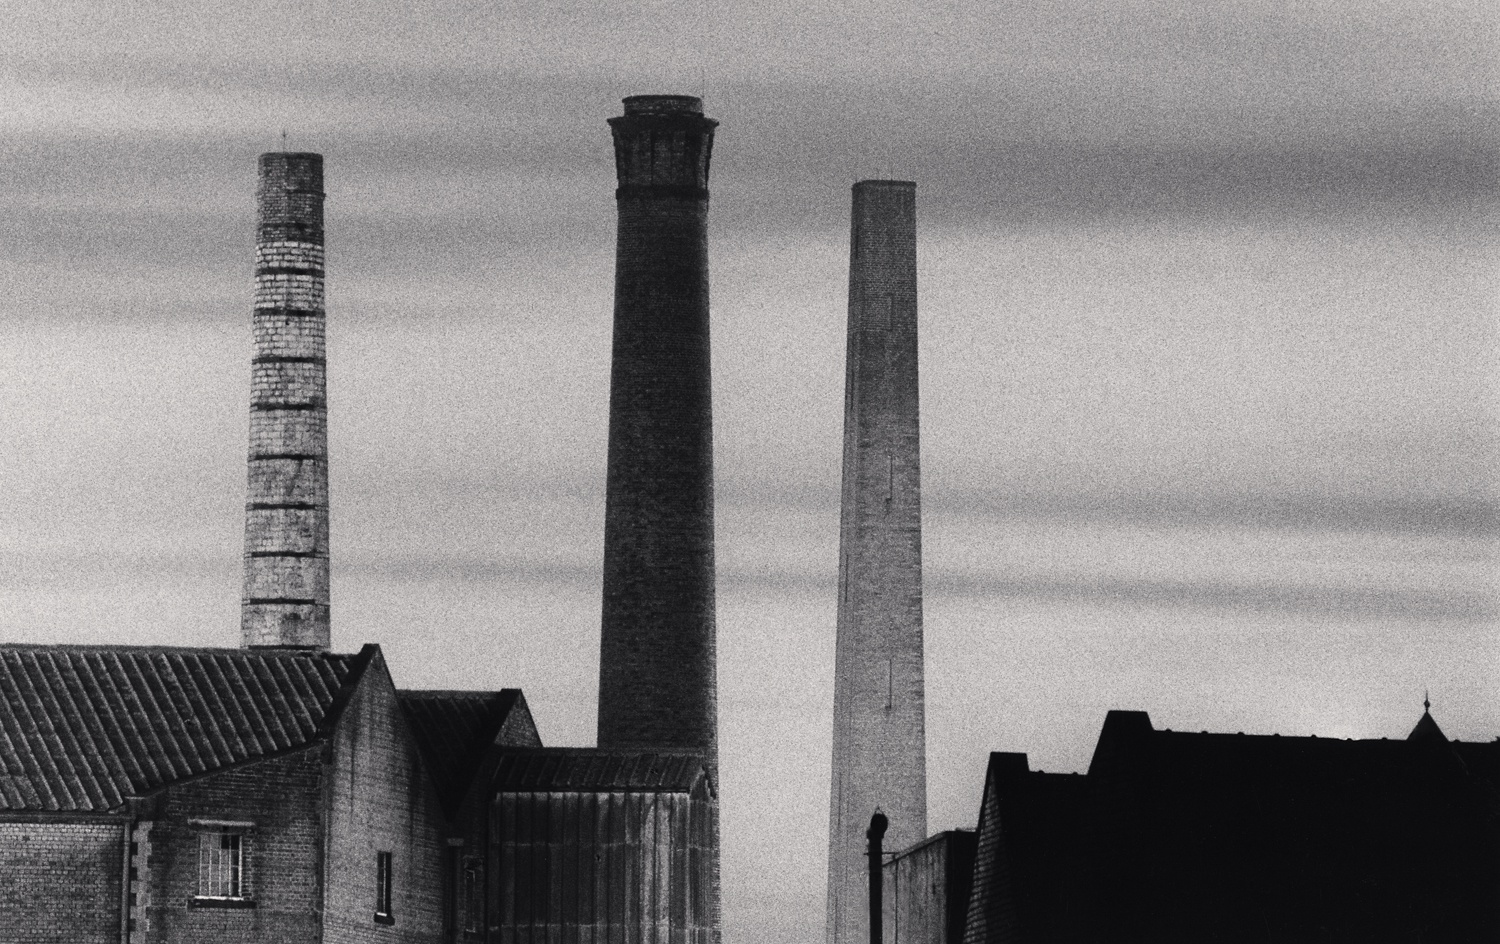 three-chimneys-study-2-saltaire-west-yorkshire-england-1983-by-michael-kenna-silver-gelatin-print-for-sale-at-bosham-gallery